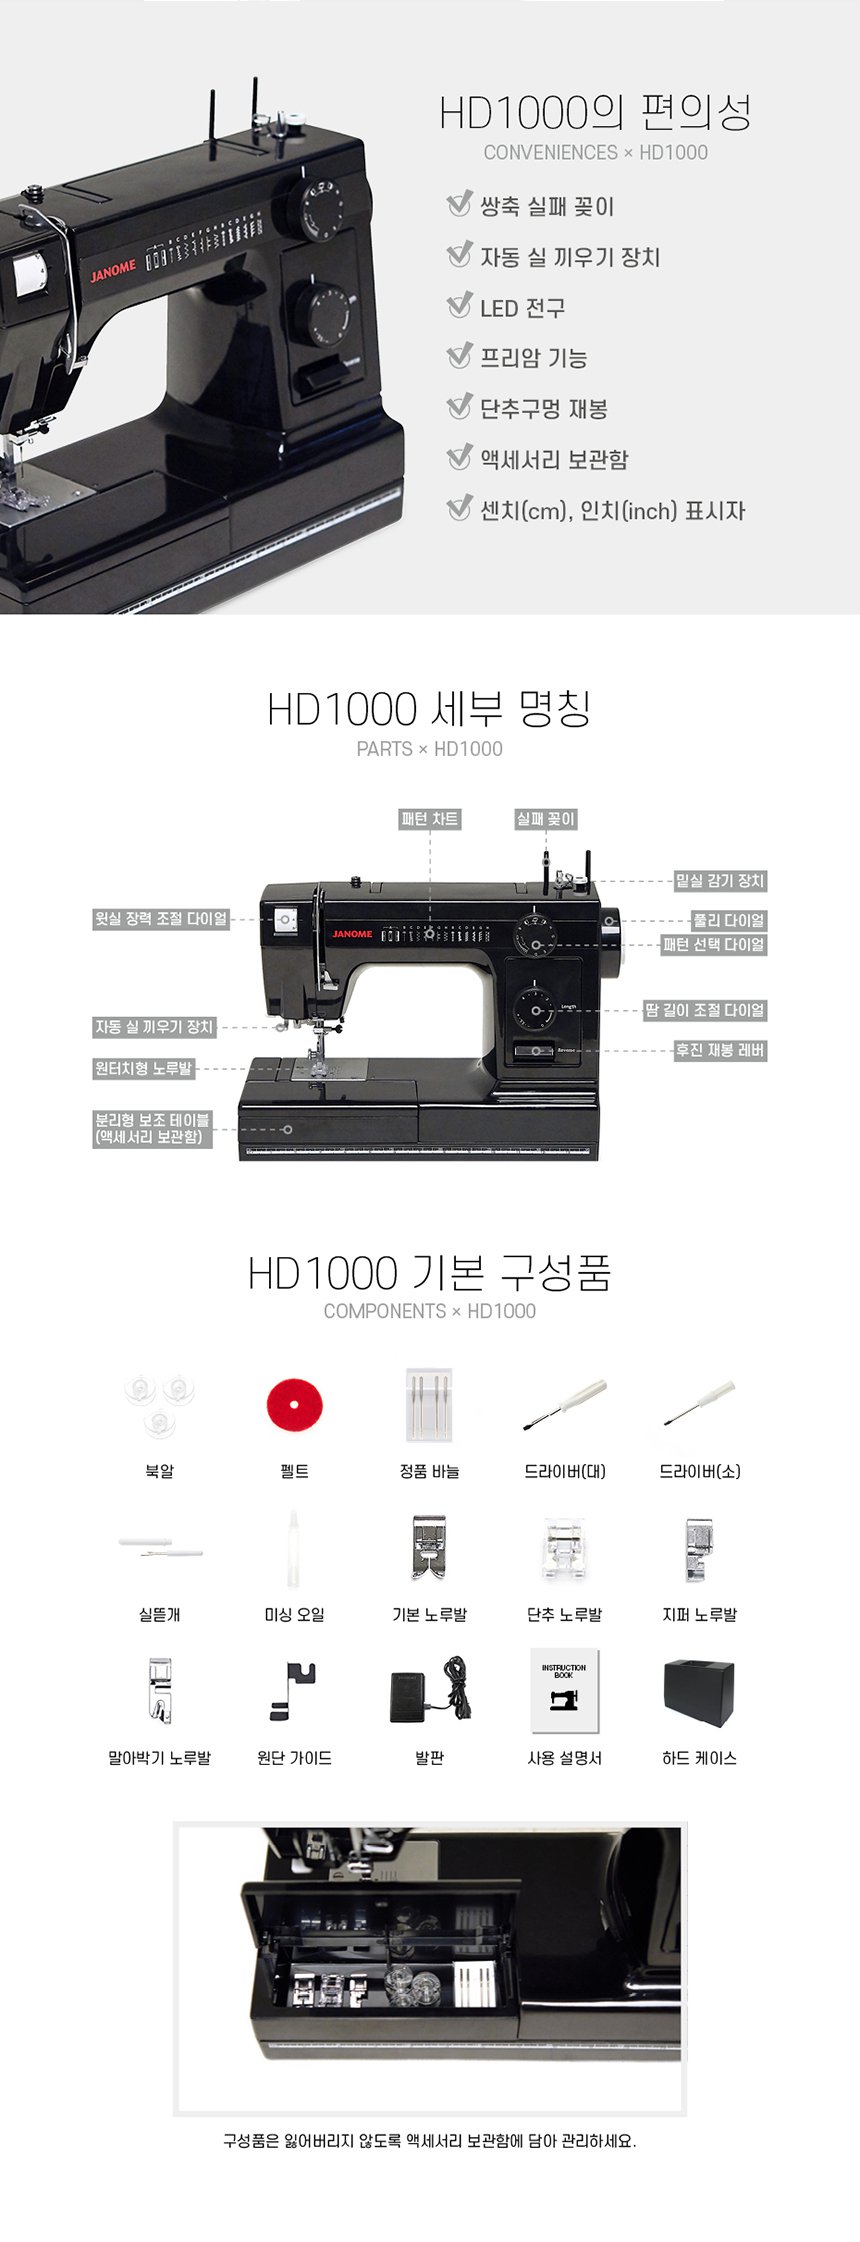 Missing Janome HD1000, 5) sewing machine